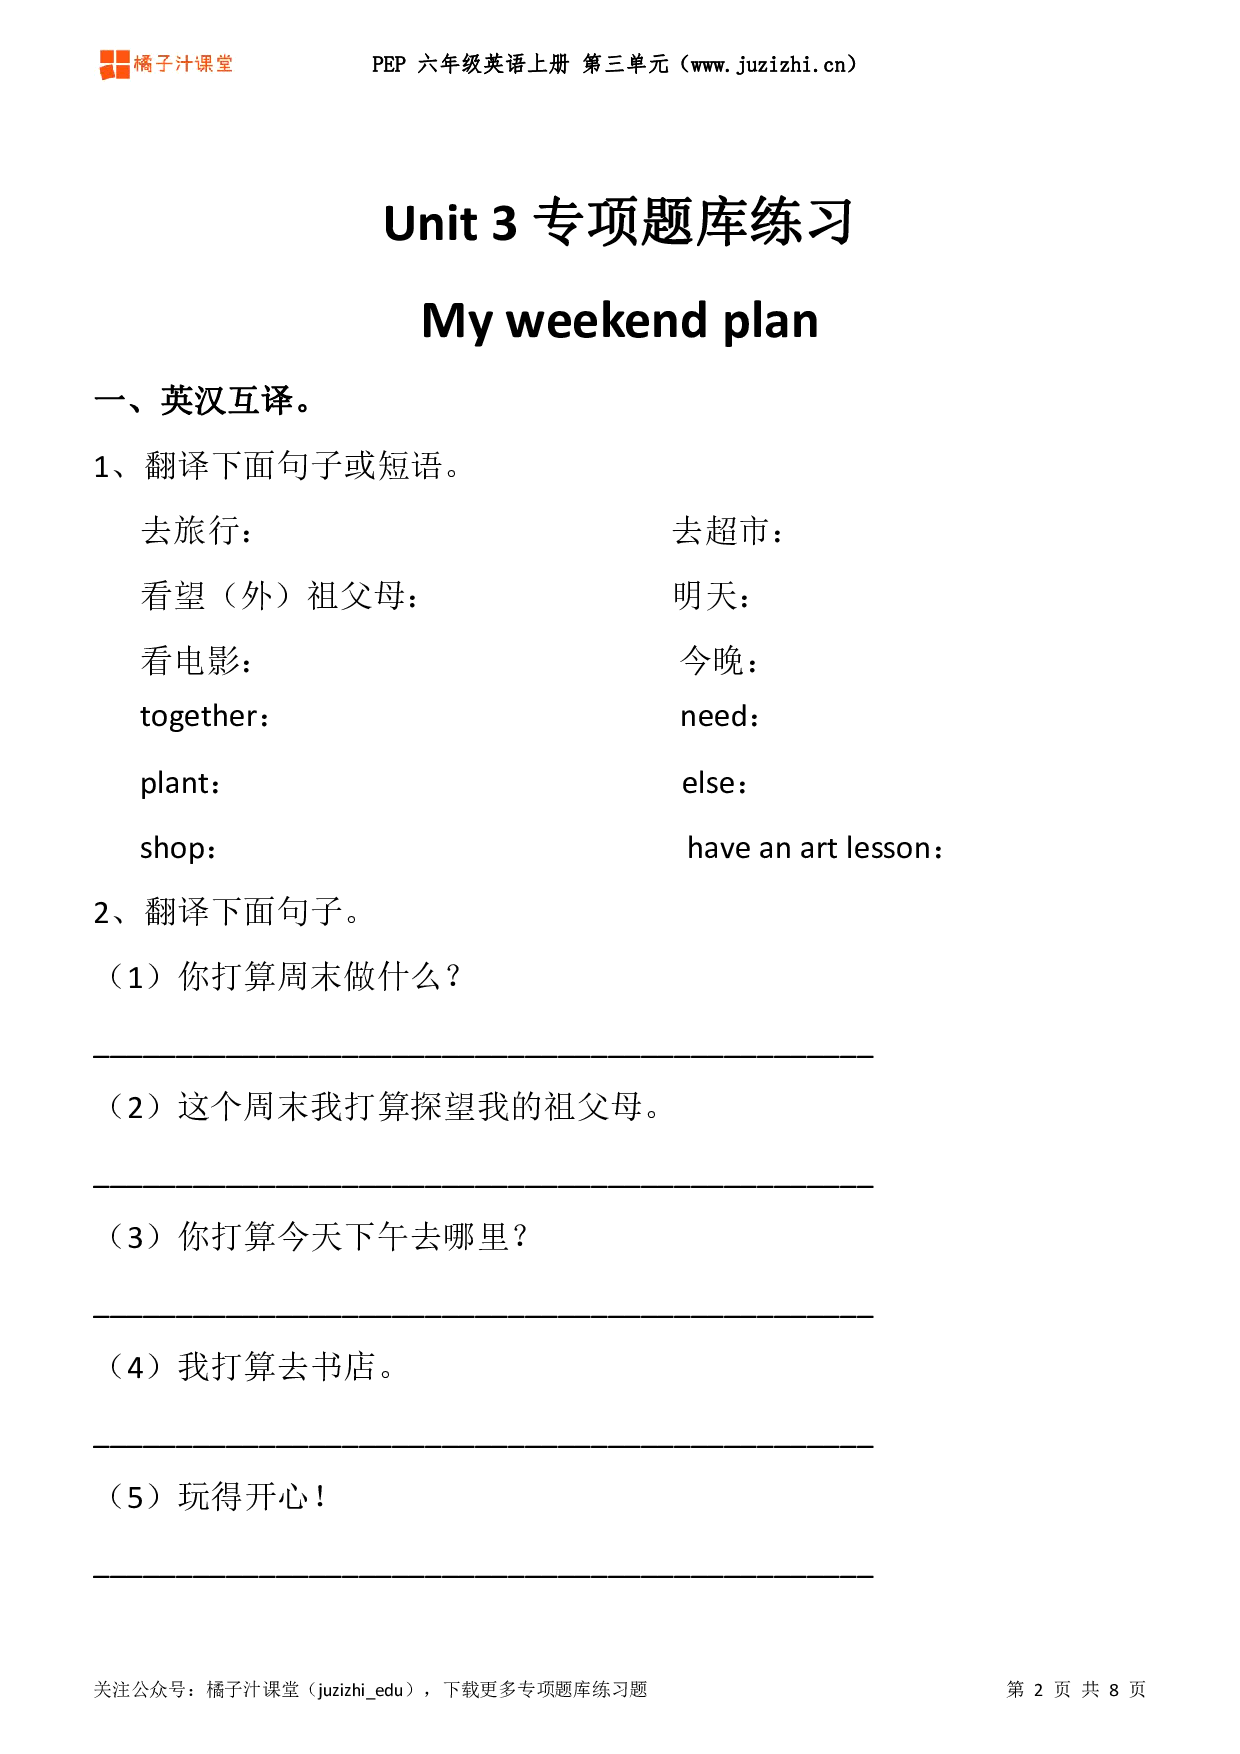 【PEP英语】六年级上册Unit 3 《My weekend plan》专项题库练习